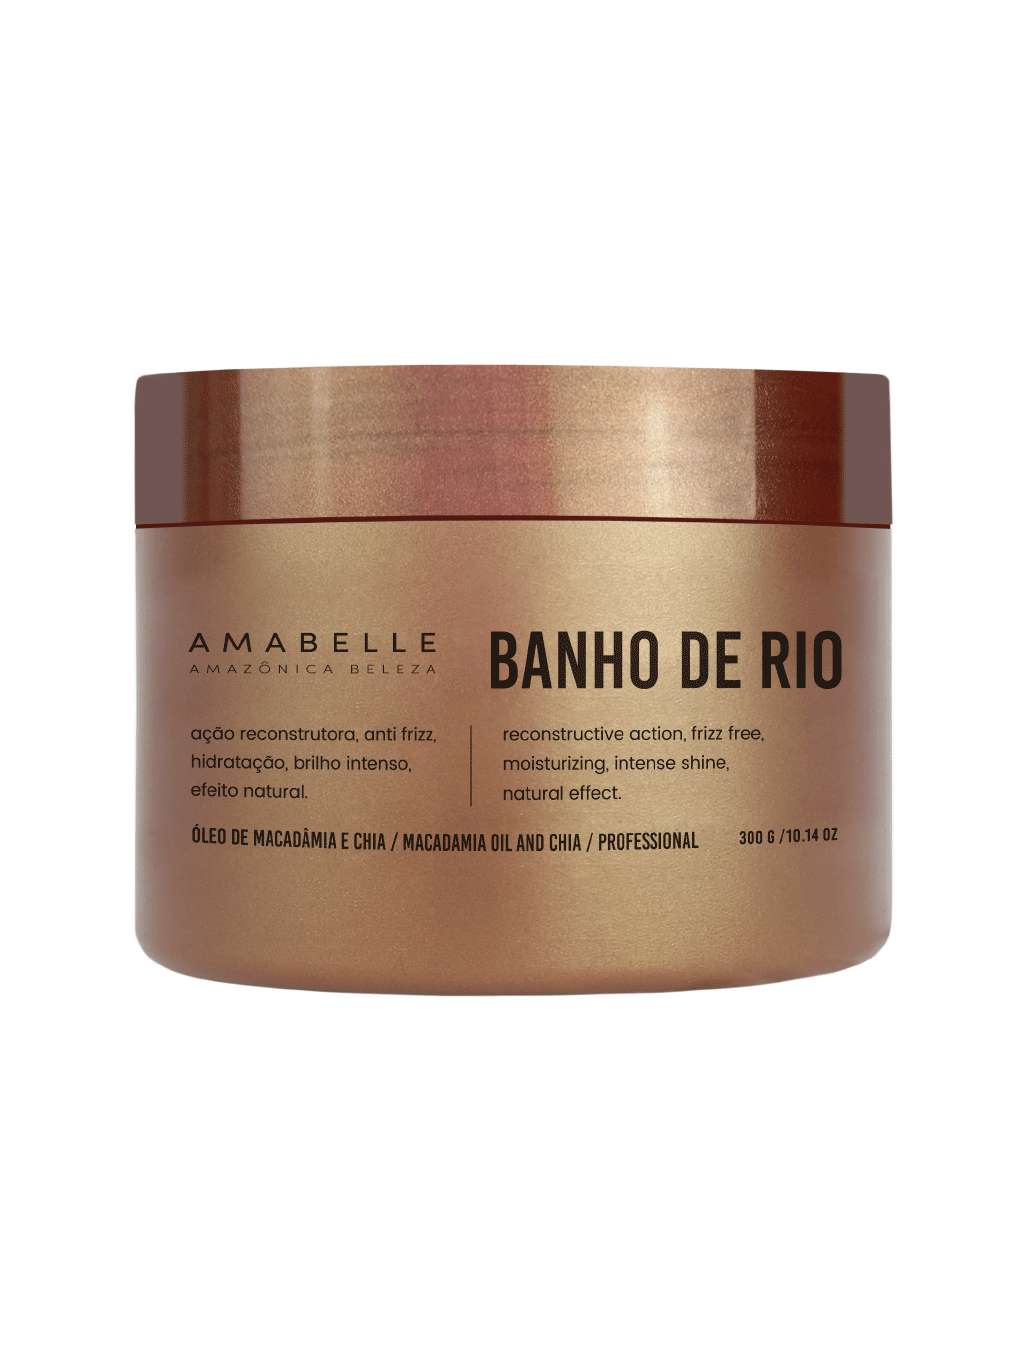 Anti frizz Treatment at home Banho De Rio